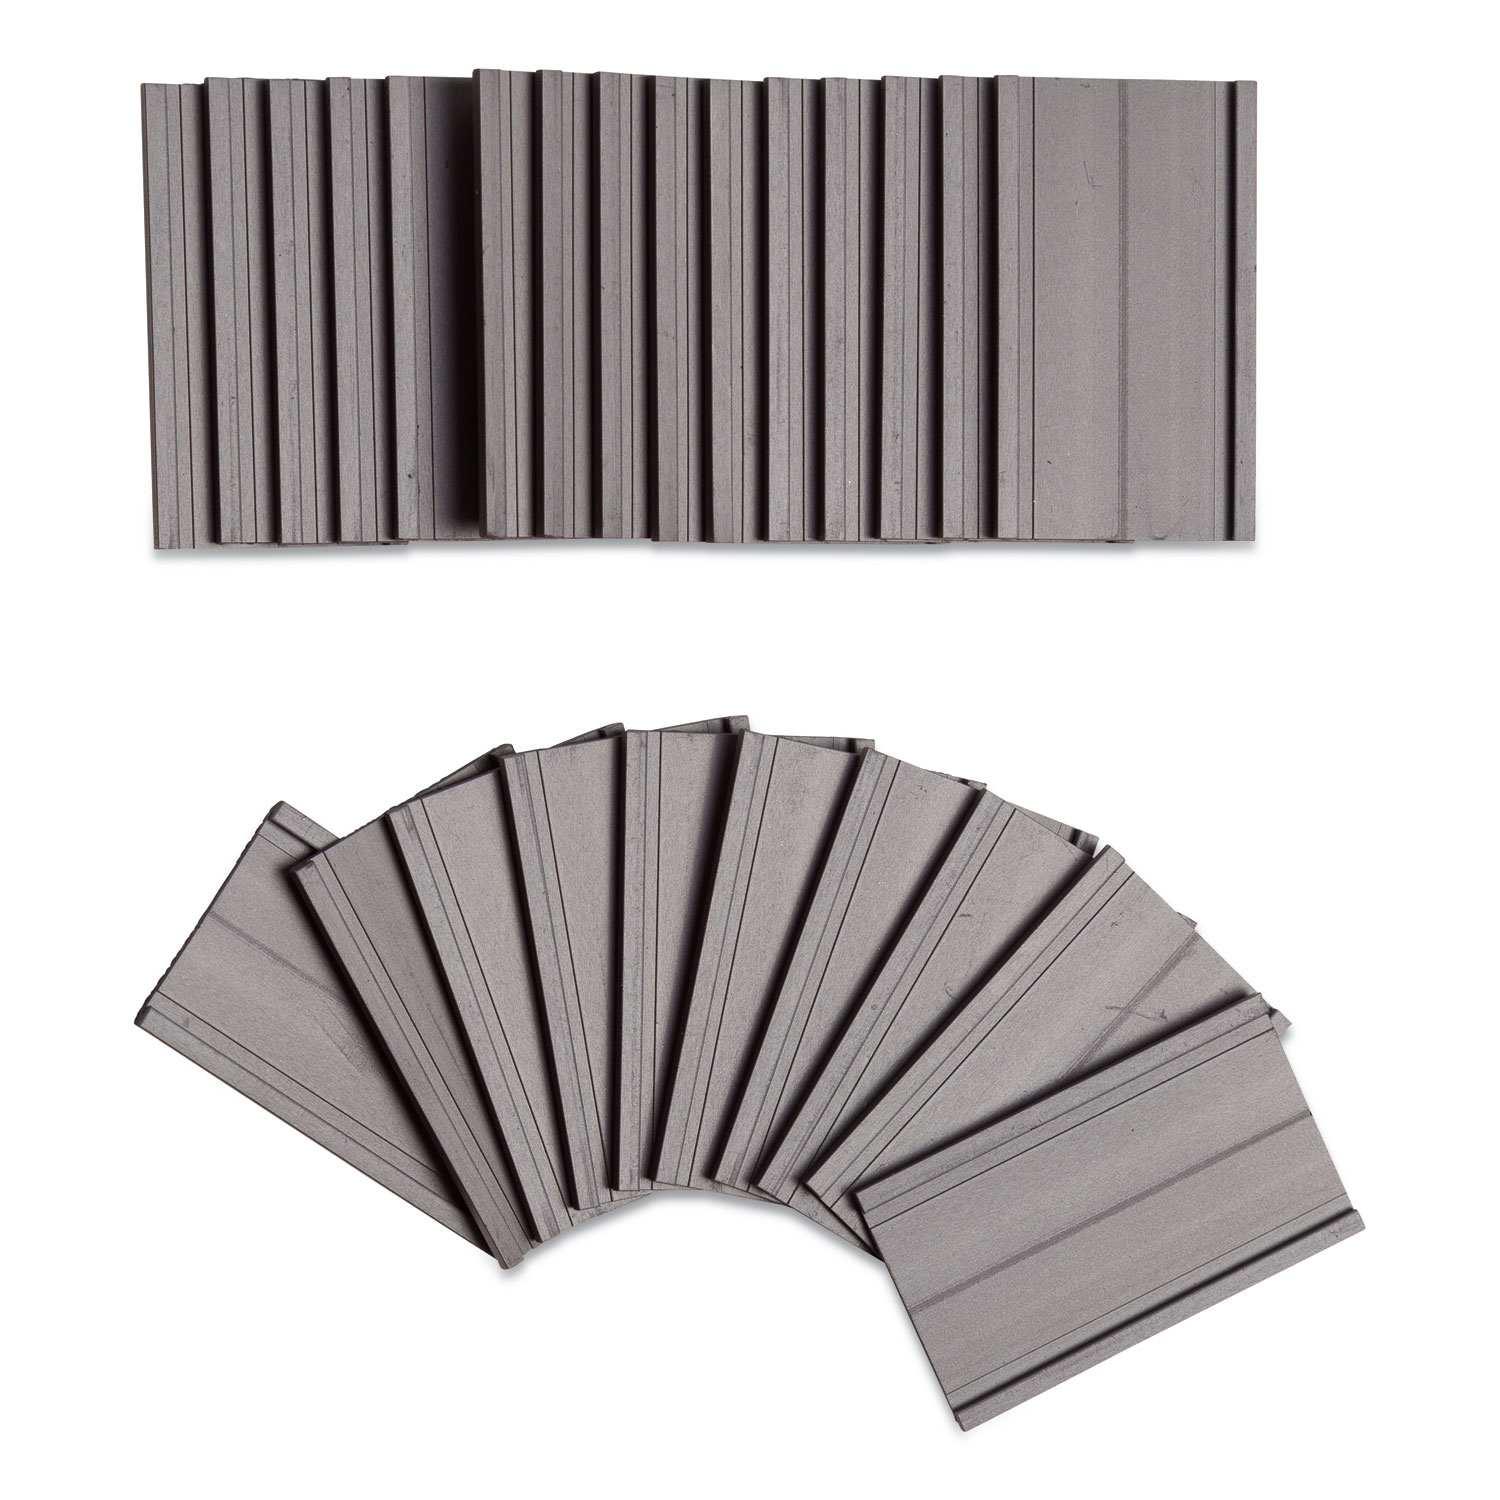 Magnetic Card Holders, 2 x 1, Black, 25/Pack